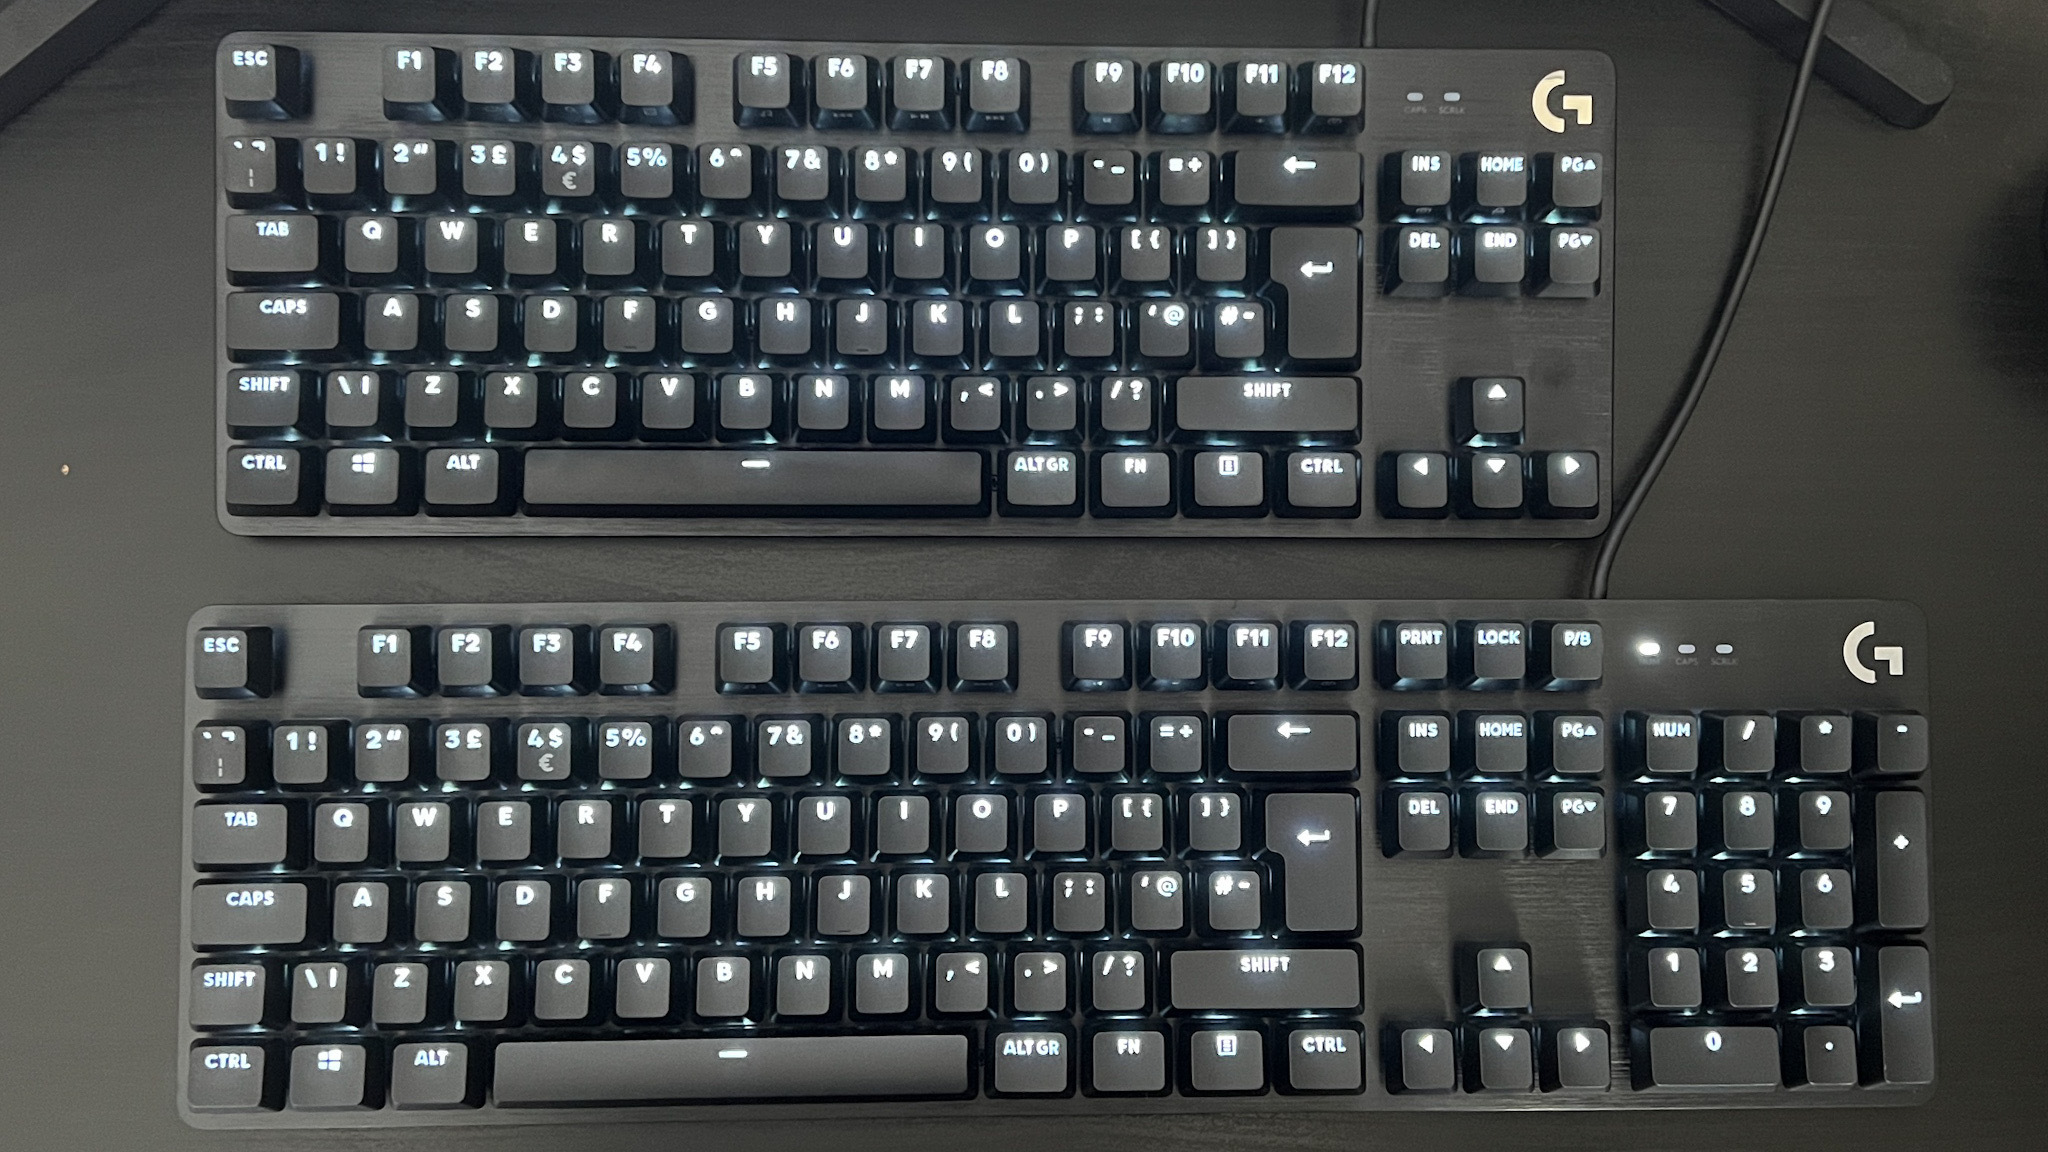 Logitech G413 TKL SE Keyboard Review - Minimalist Gaming